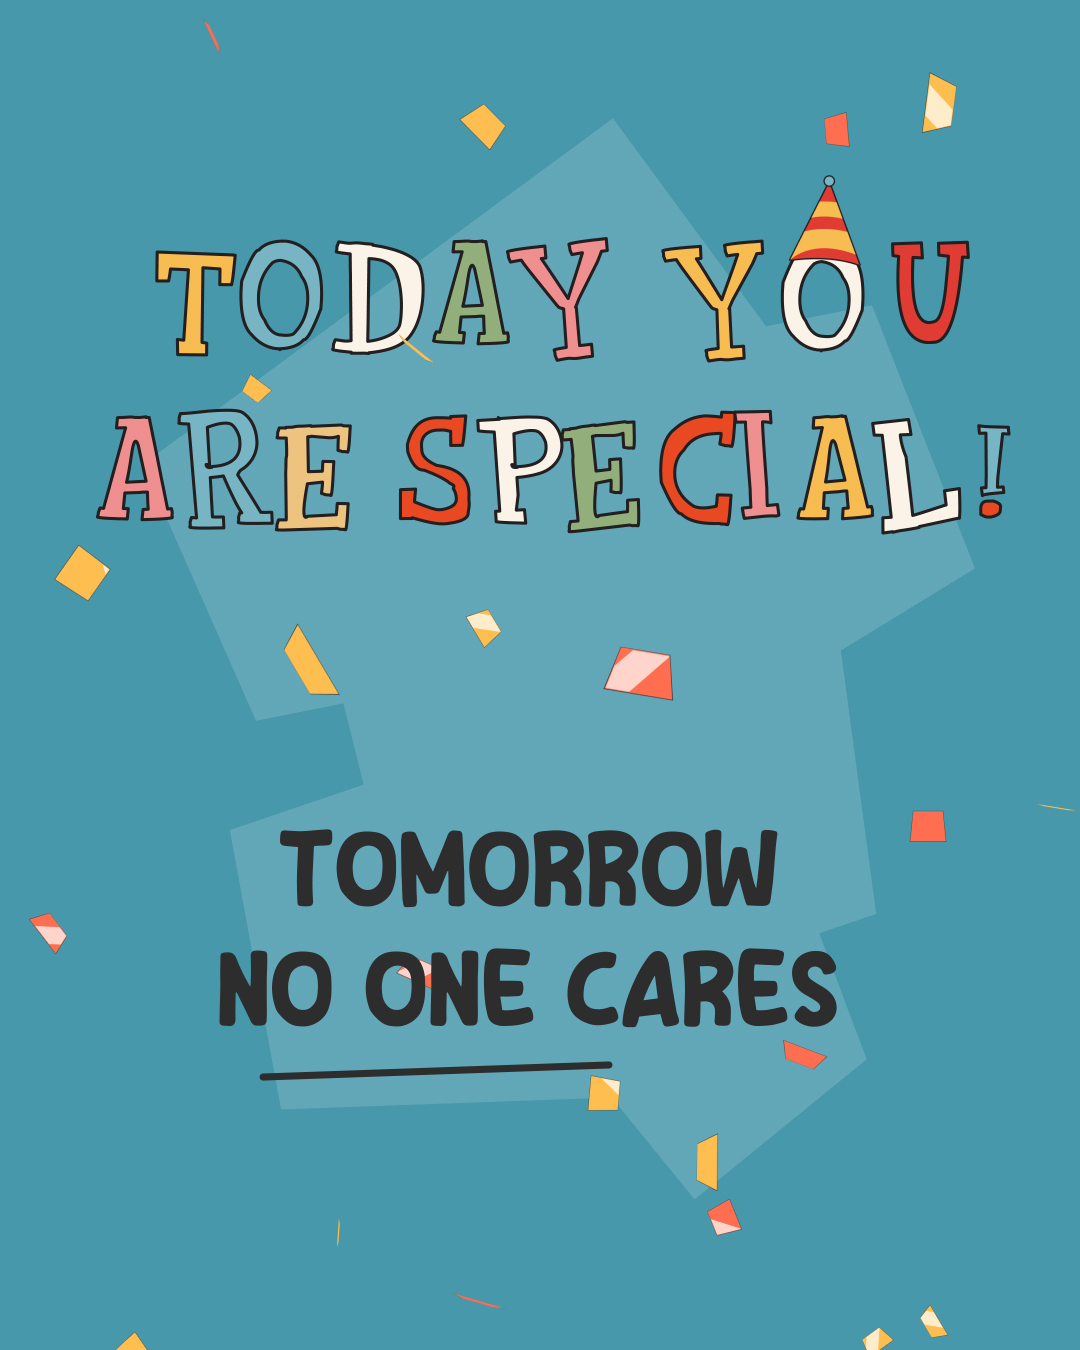 Free Funny Birthday Animated Image with Confetti - birthdayimg.com